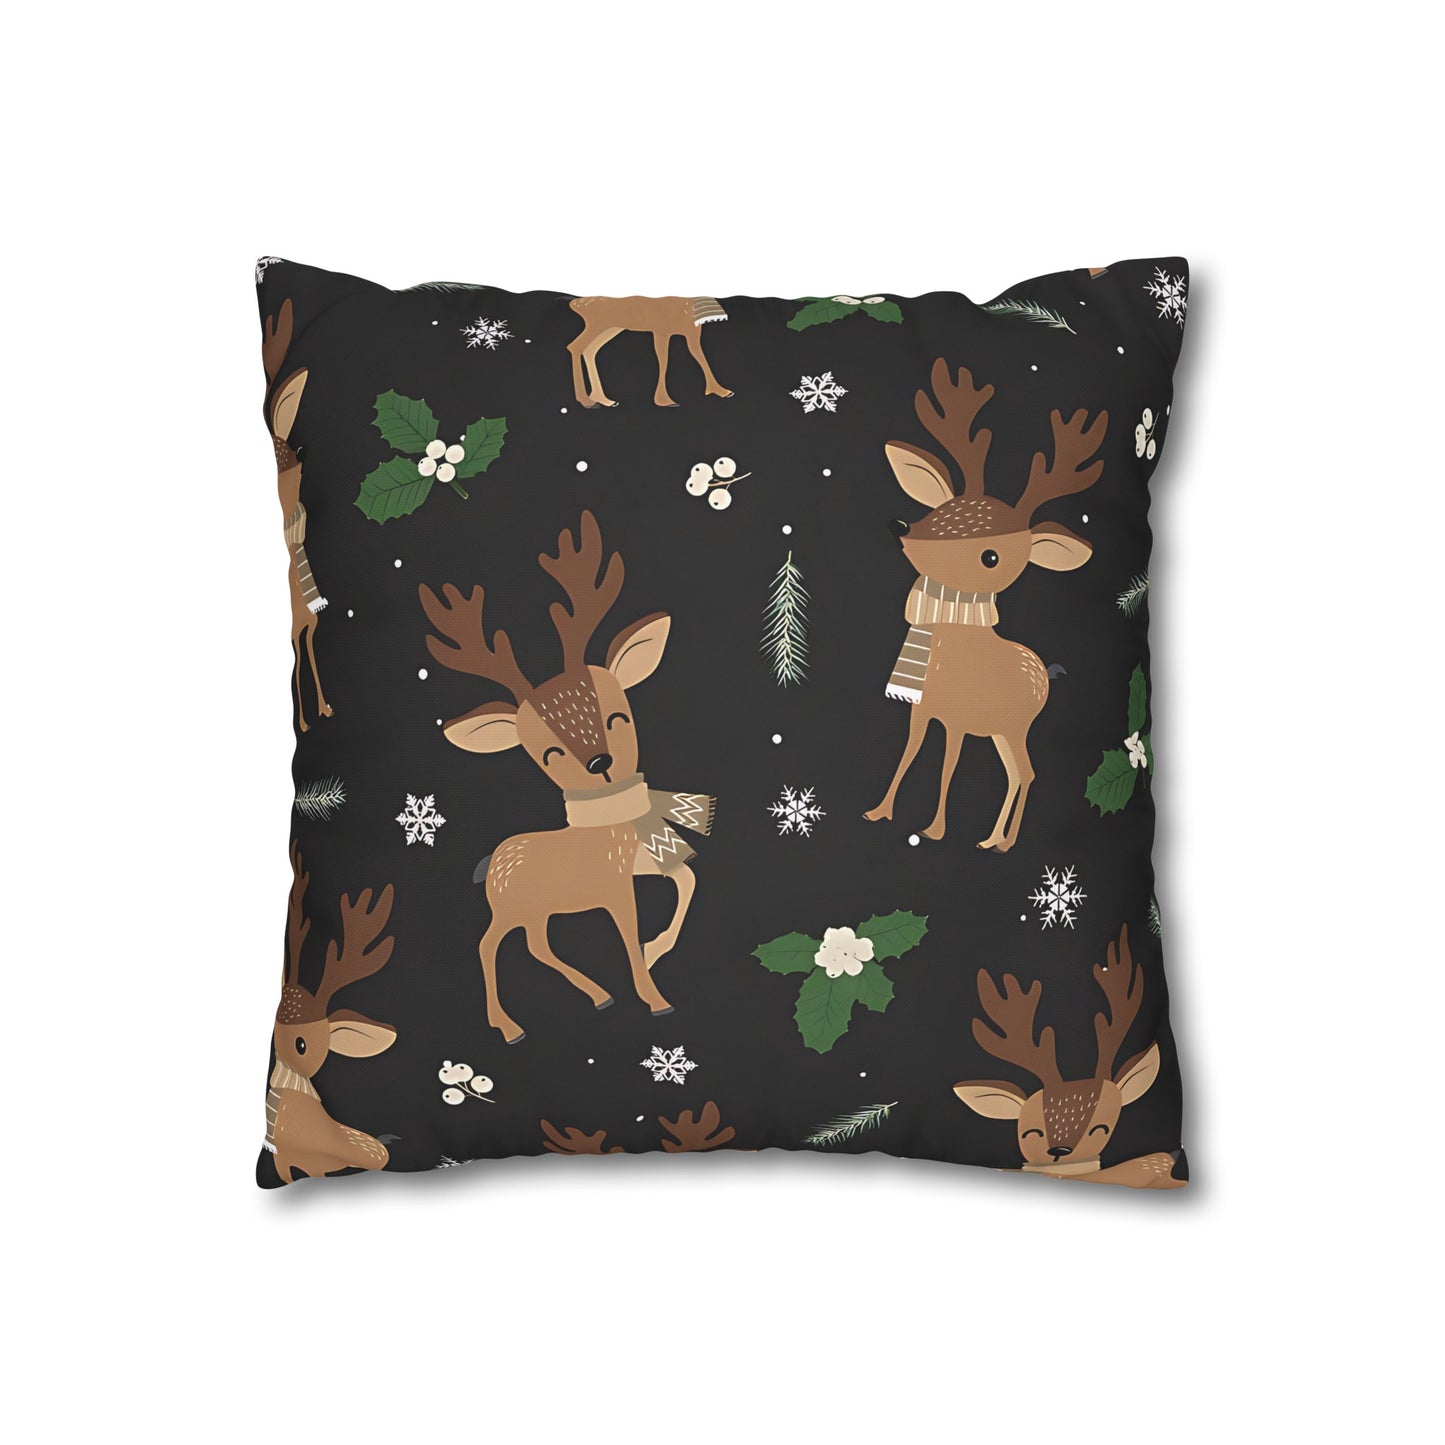 Reindeer #1 Cushion Cover